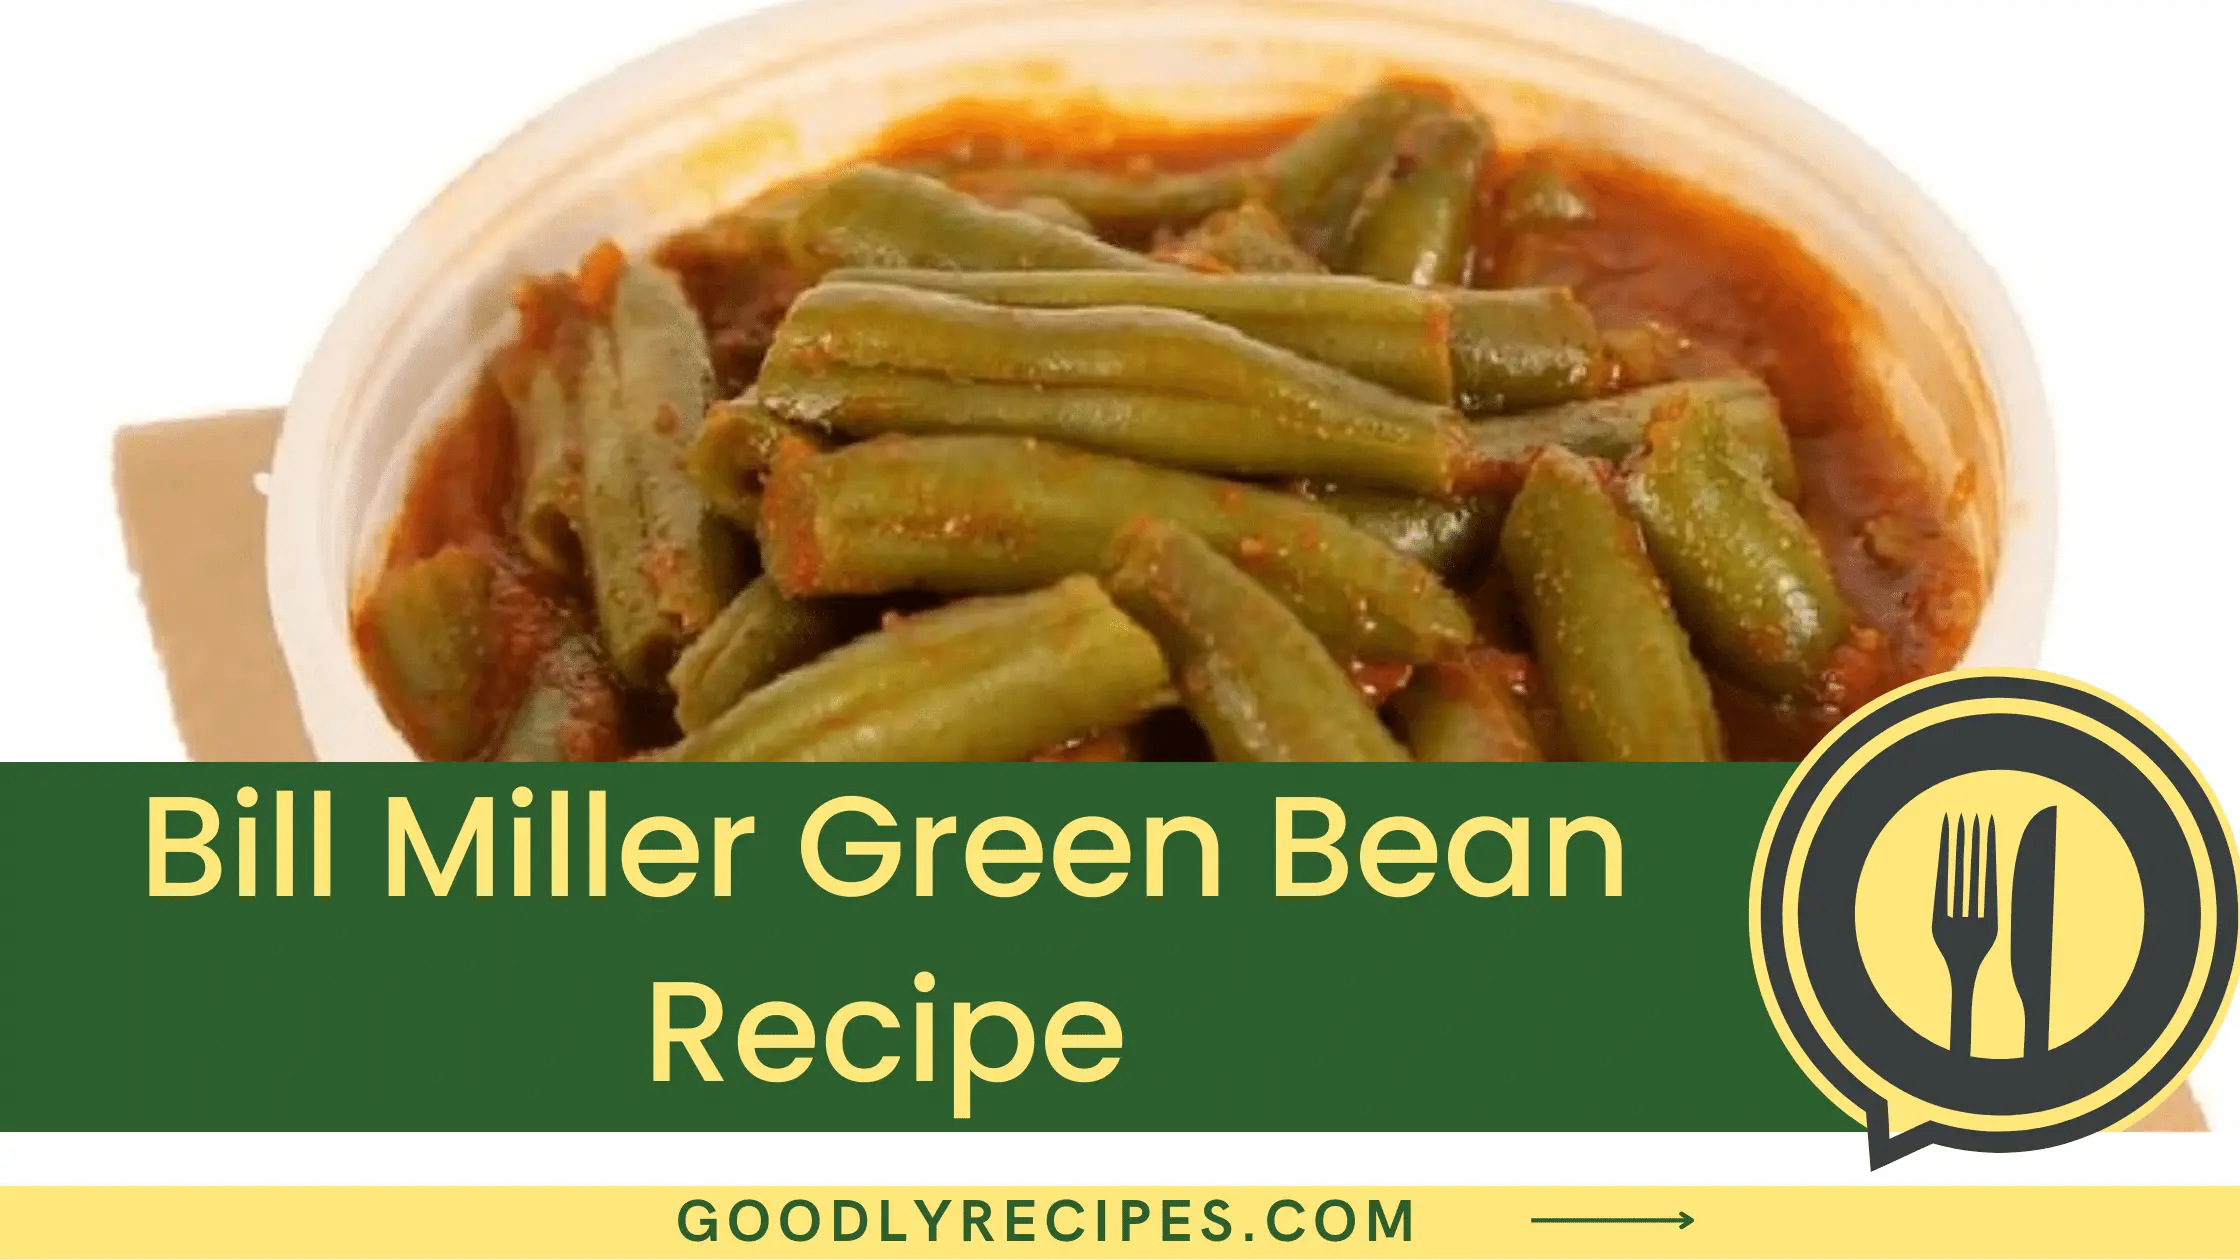 Bill Miller Green Bean Recipe - For Food Lovers